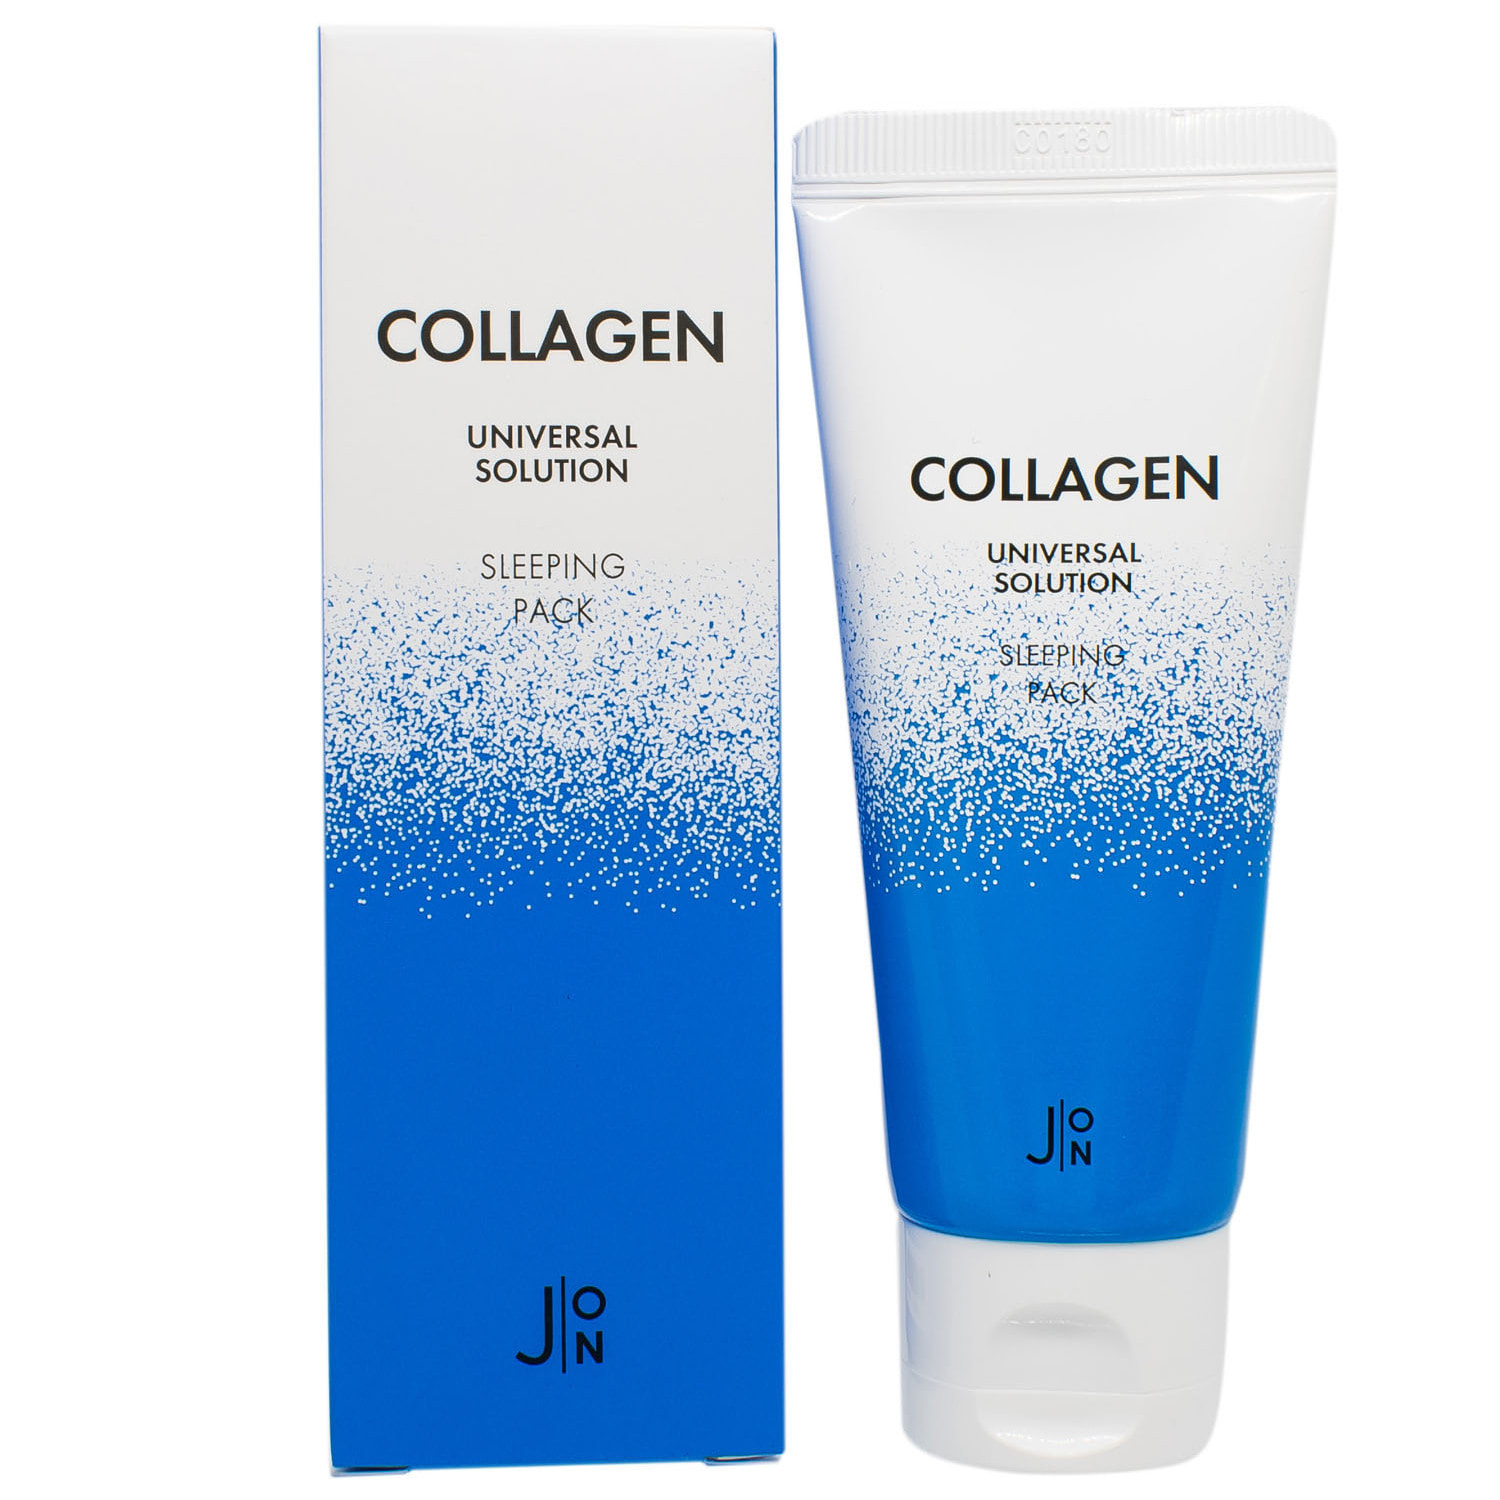 Купить коллагеновую маску. Маска коллаген Джион. Collagen Universal solution sleeping Pack. Jon Collagen ночная маска. Collagen маска для лица.